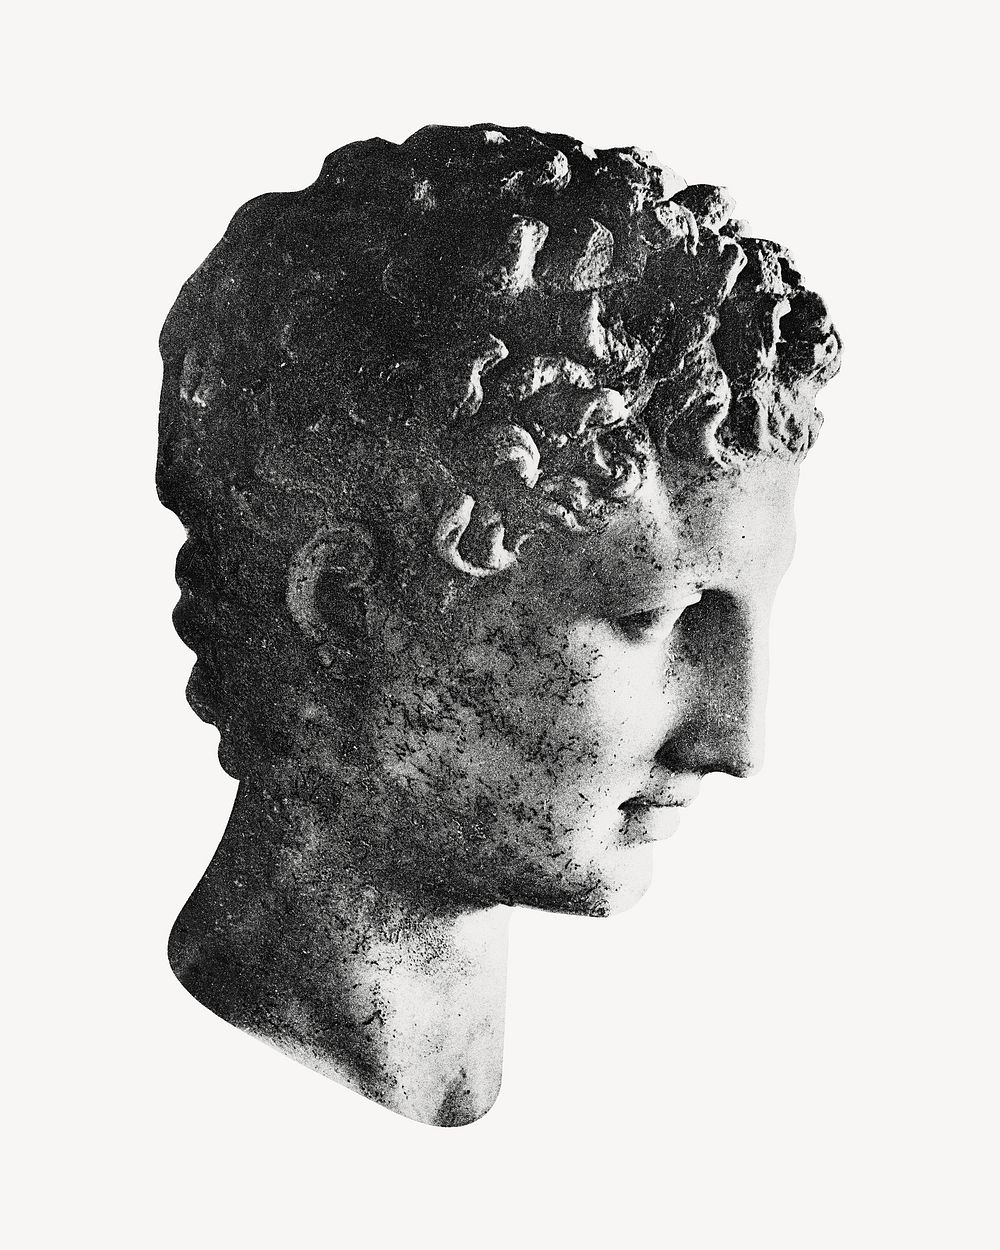 Hermes Greek God sculpture, by Praxiteles. Remixed by rawpixel.